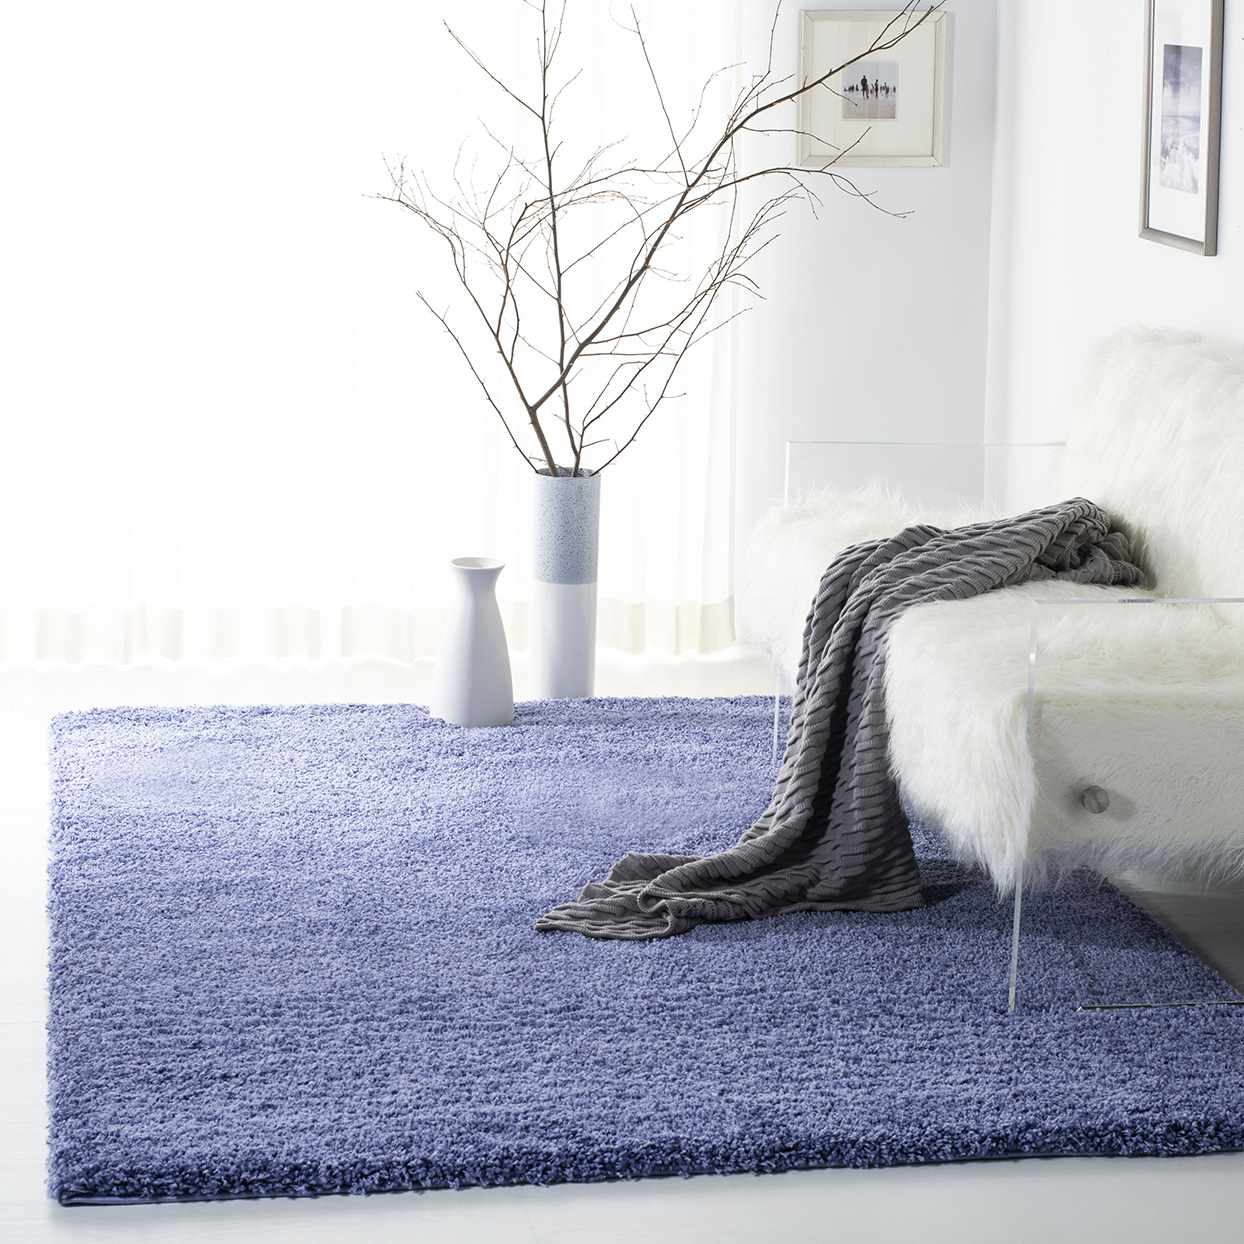 living room with purple rug